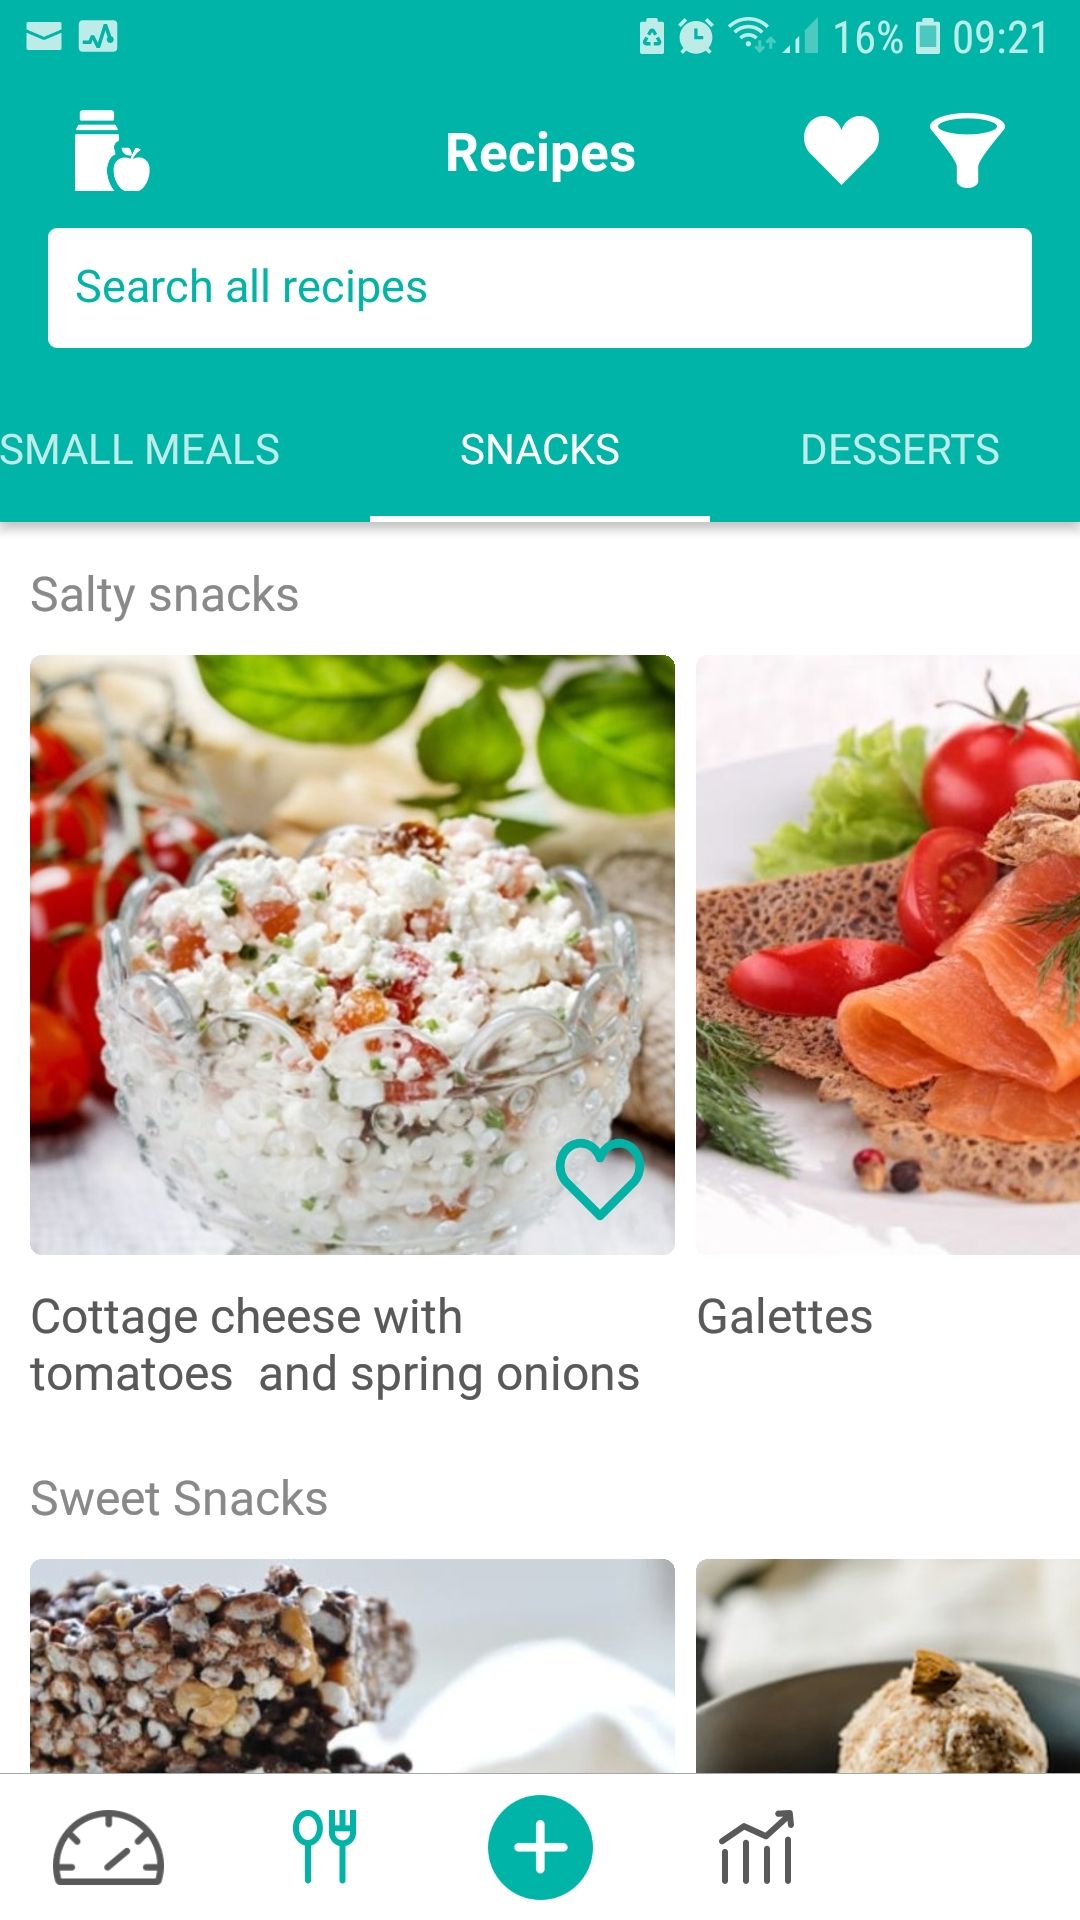 Cara Care mobile IBS app snack recipes